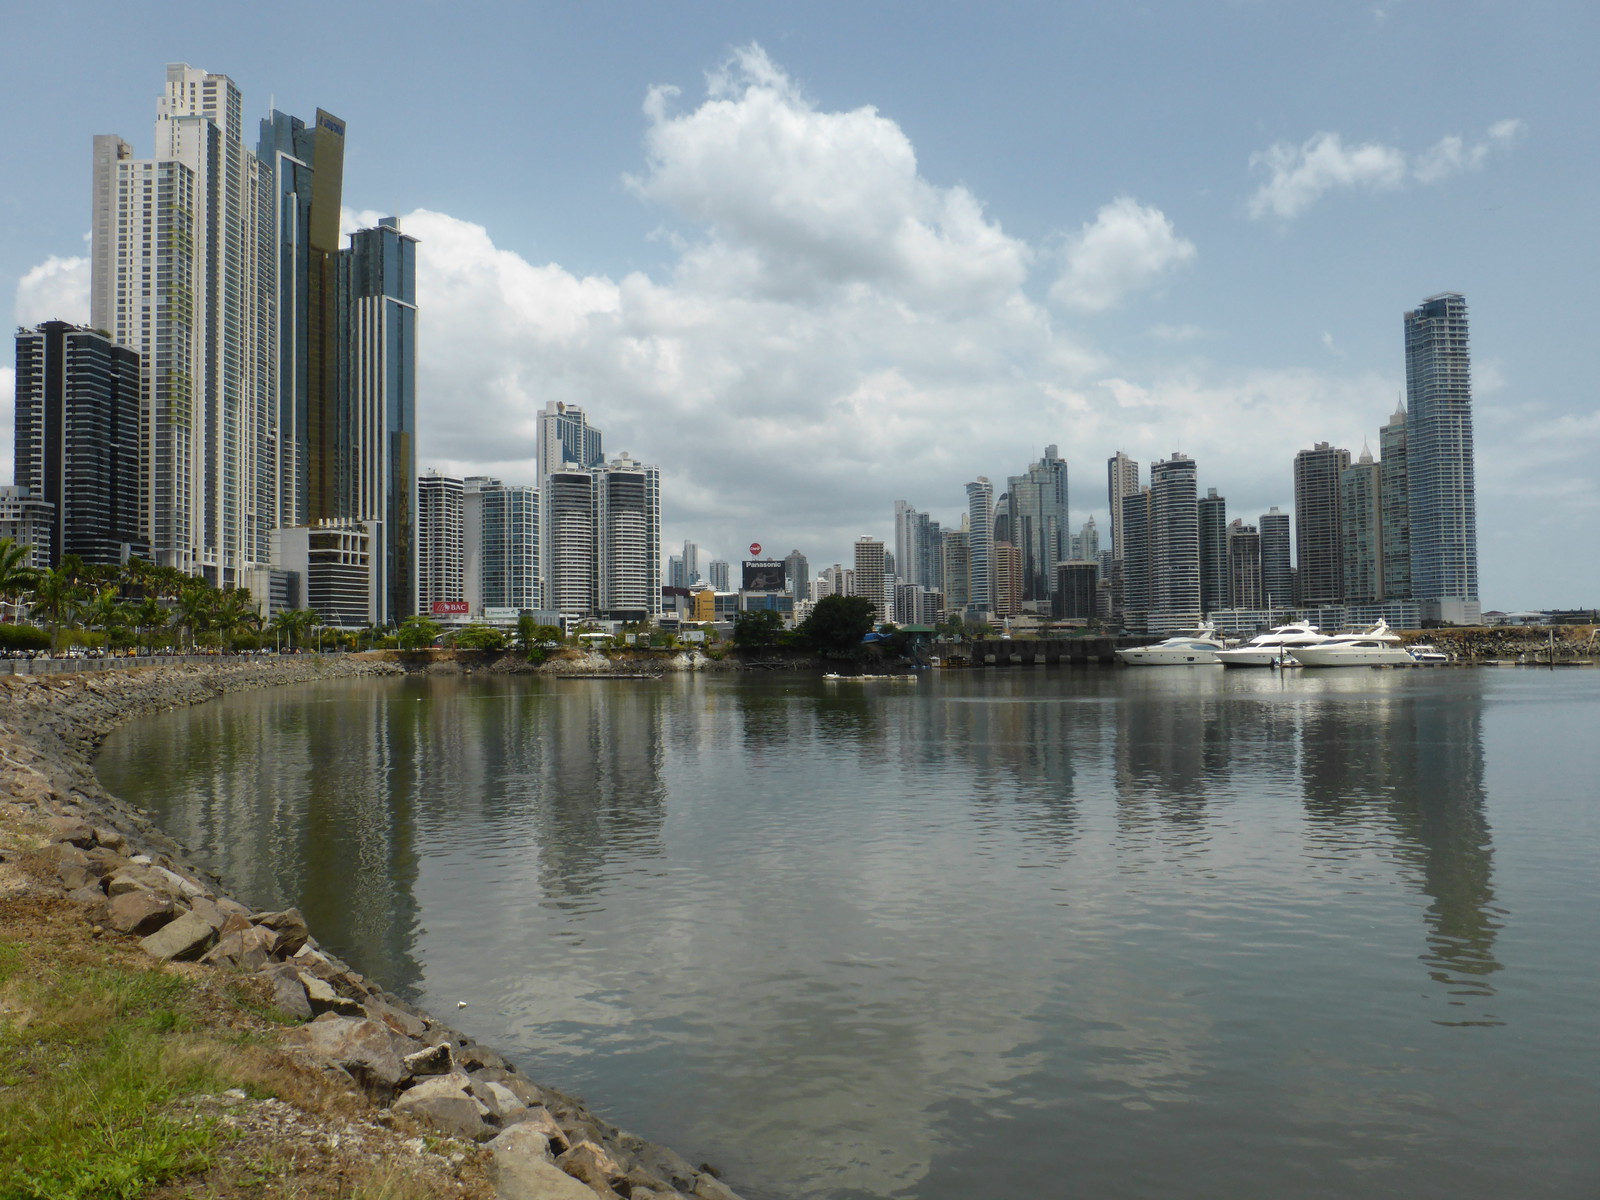 The Panama City skyline